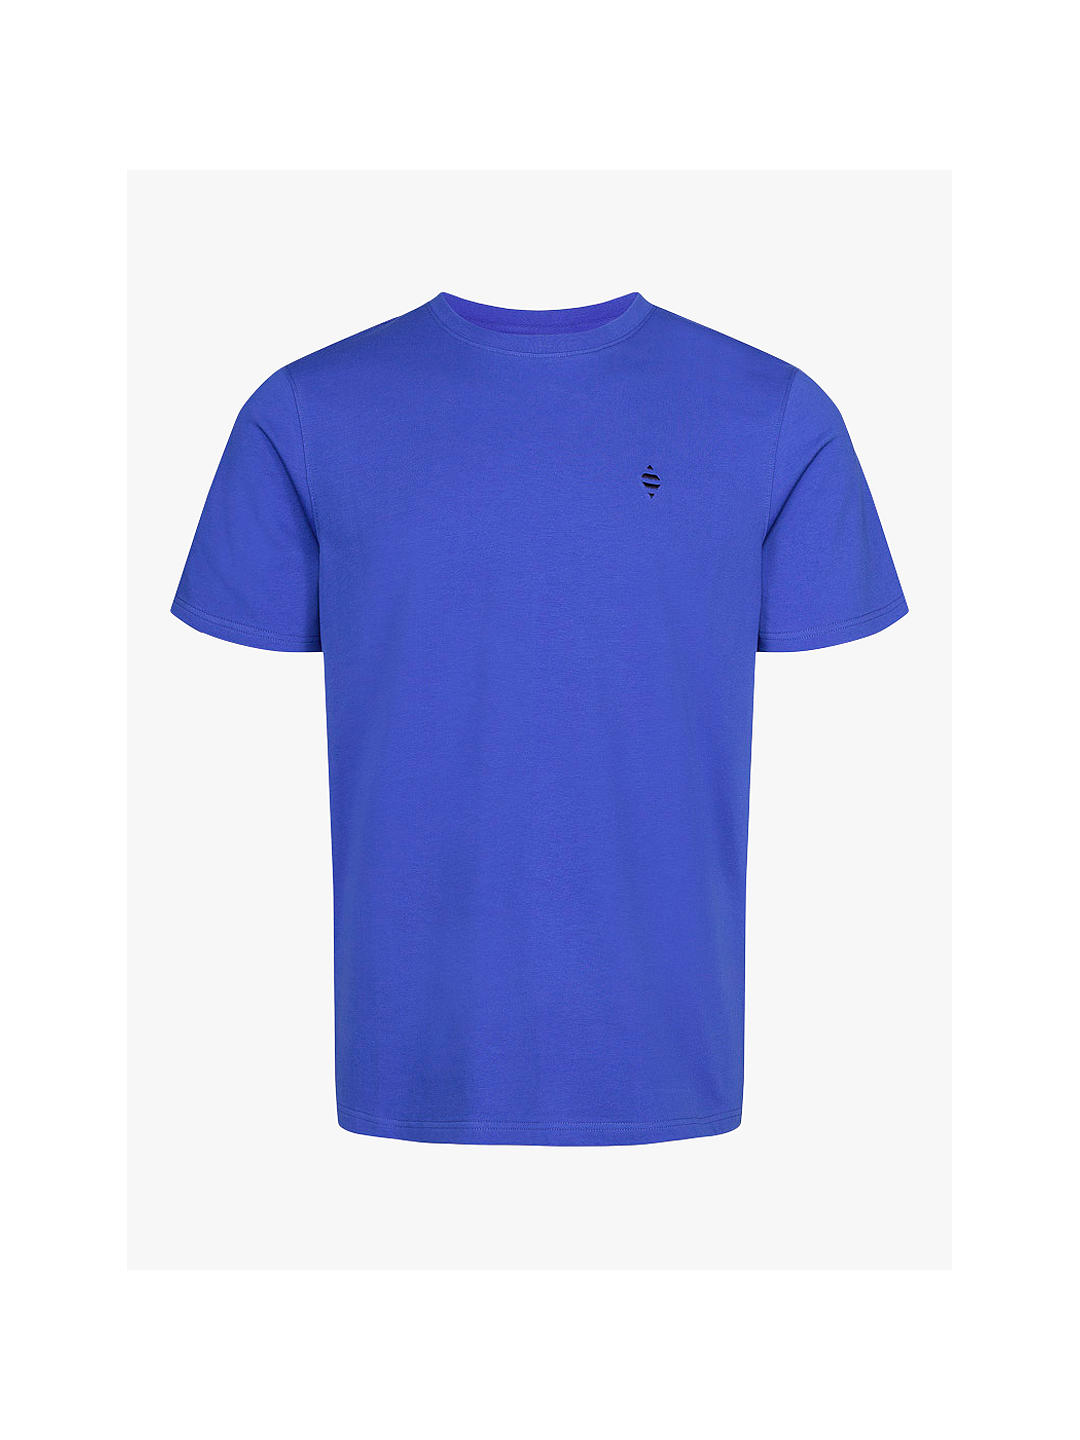 Panos Emporio Element T-Shirt, Dazzling Blue at John Lewis & Partners